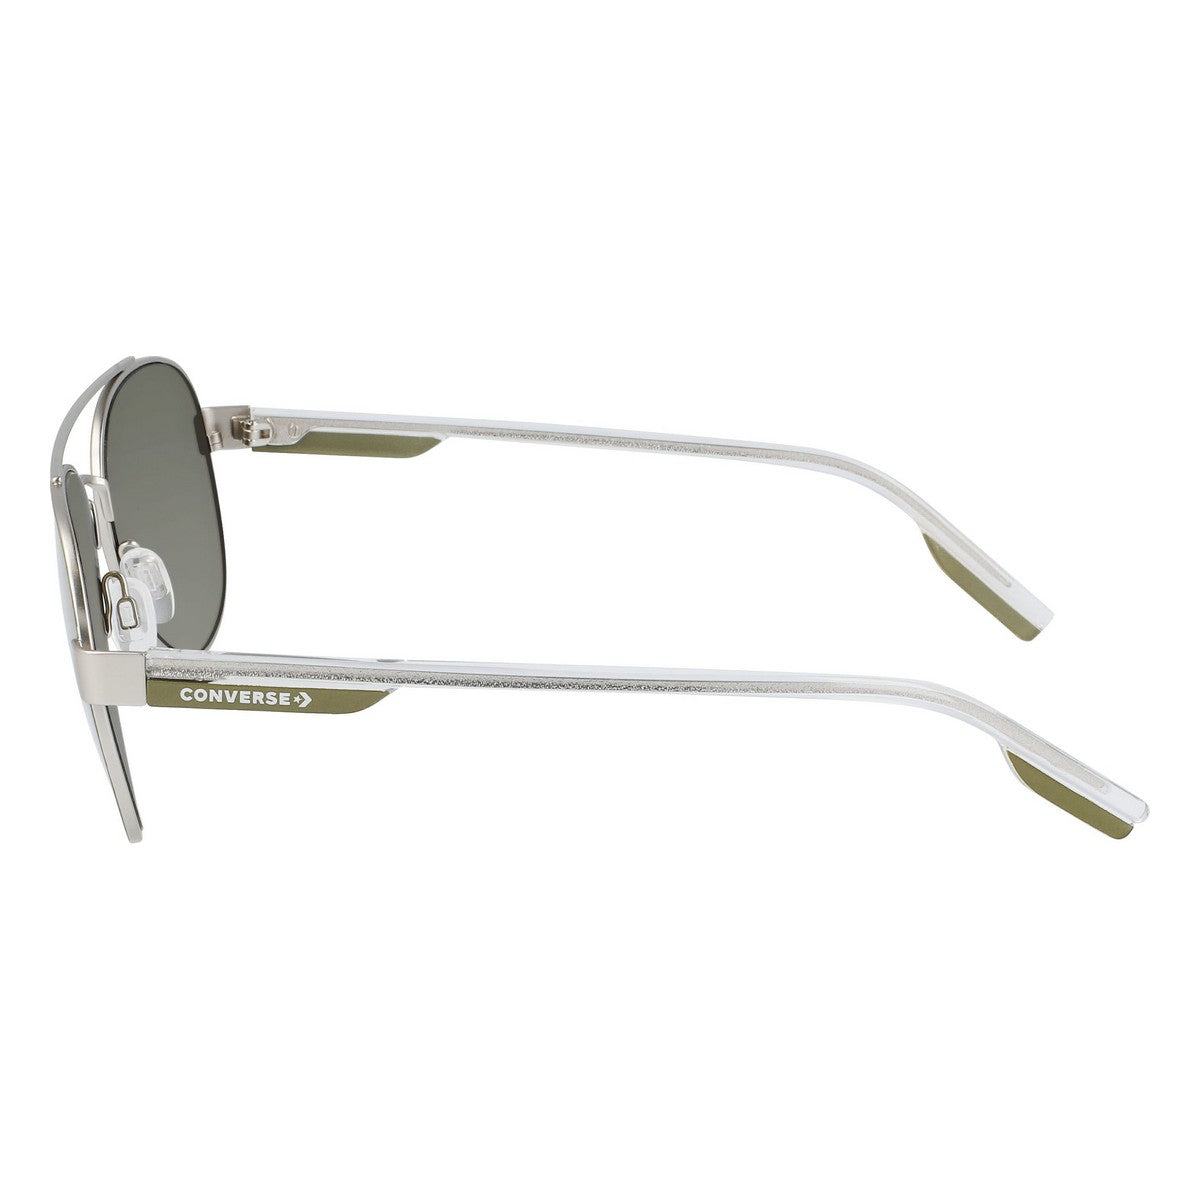 Kaufe Herrensonnenbrille Converse CV300S-DISRUPT-310 ø 58 mm bei AWK Flagship um € 53.00